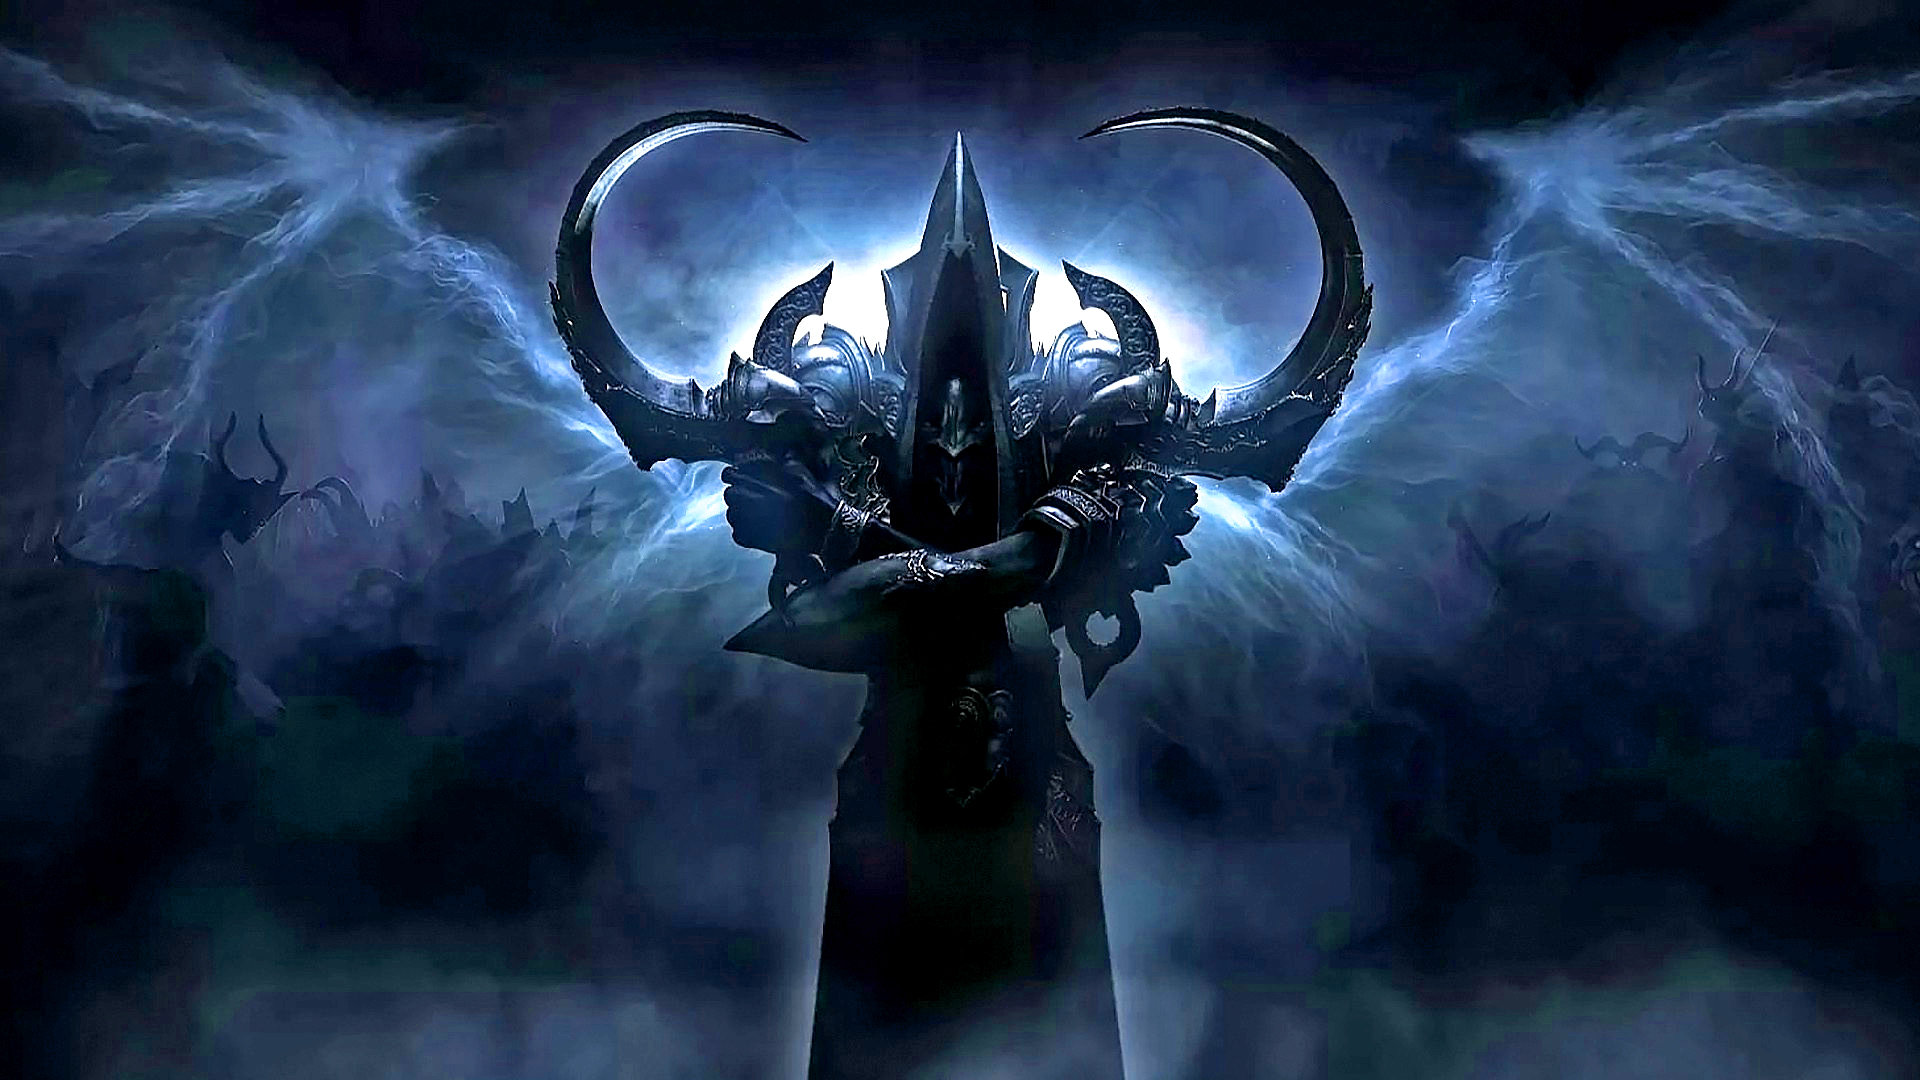 Best Diablo 3: Reaper Of Souls wallpaper ID:400301 for High Resolution 1080p desktop